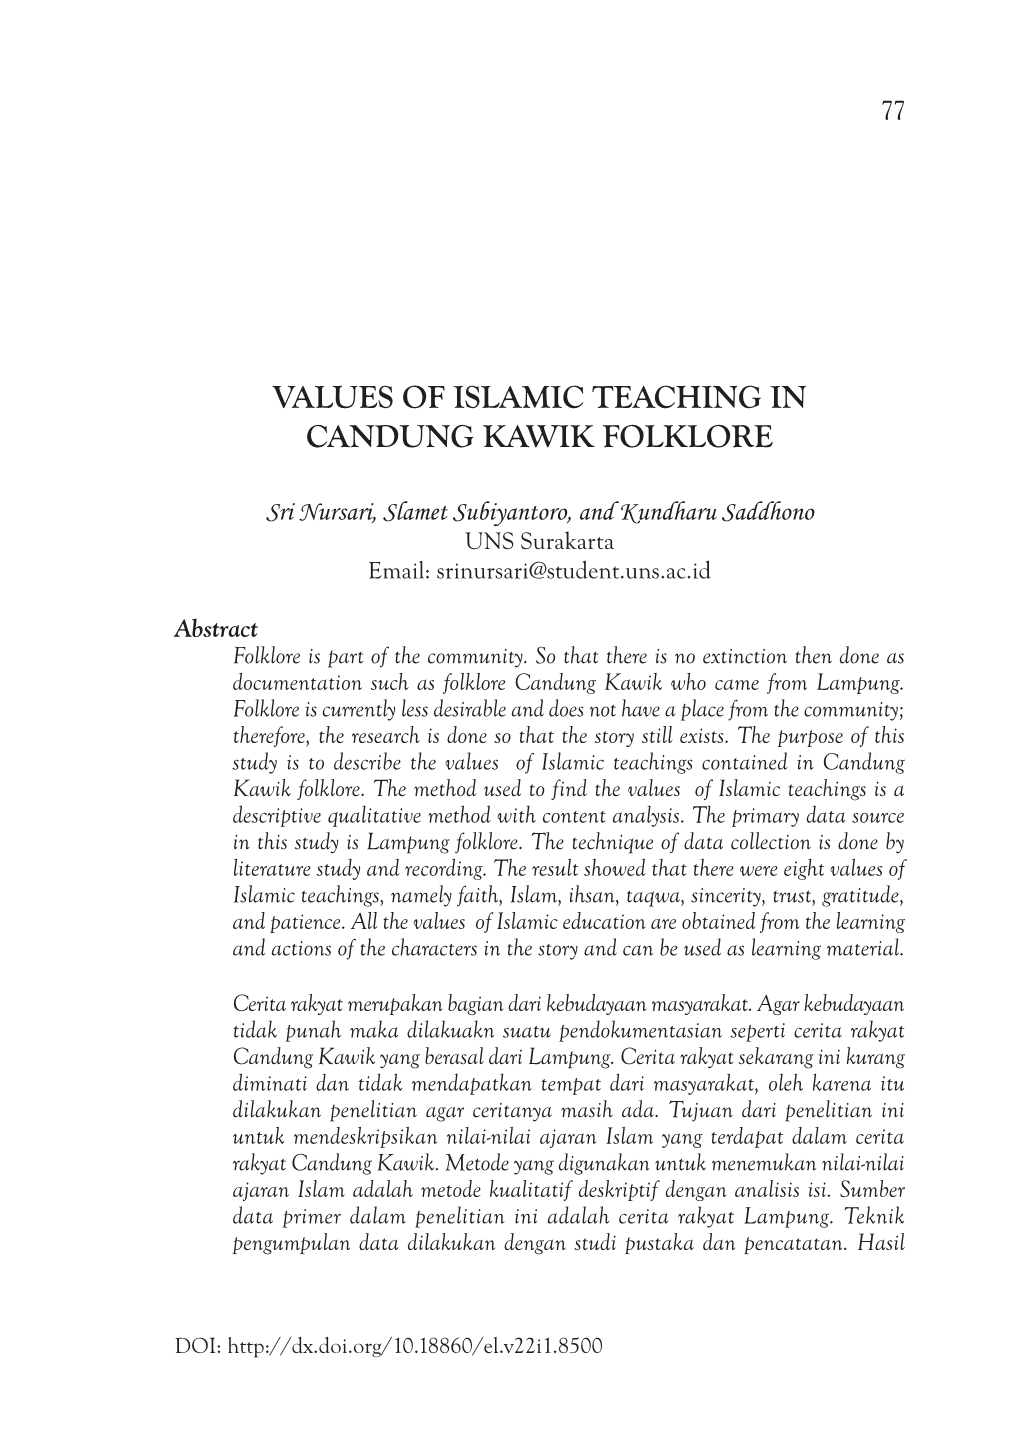 Values of Islamic Teaching in Candung Kawik Folklore